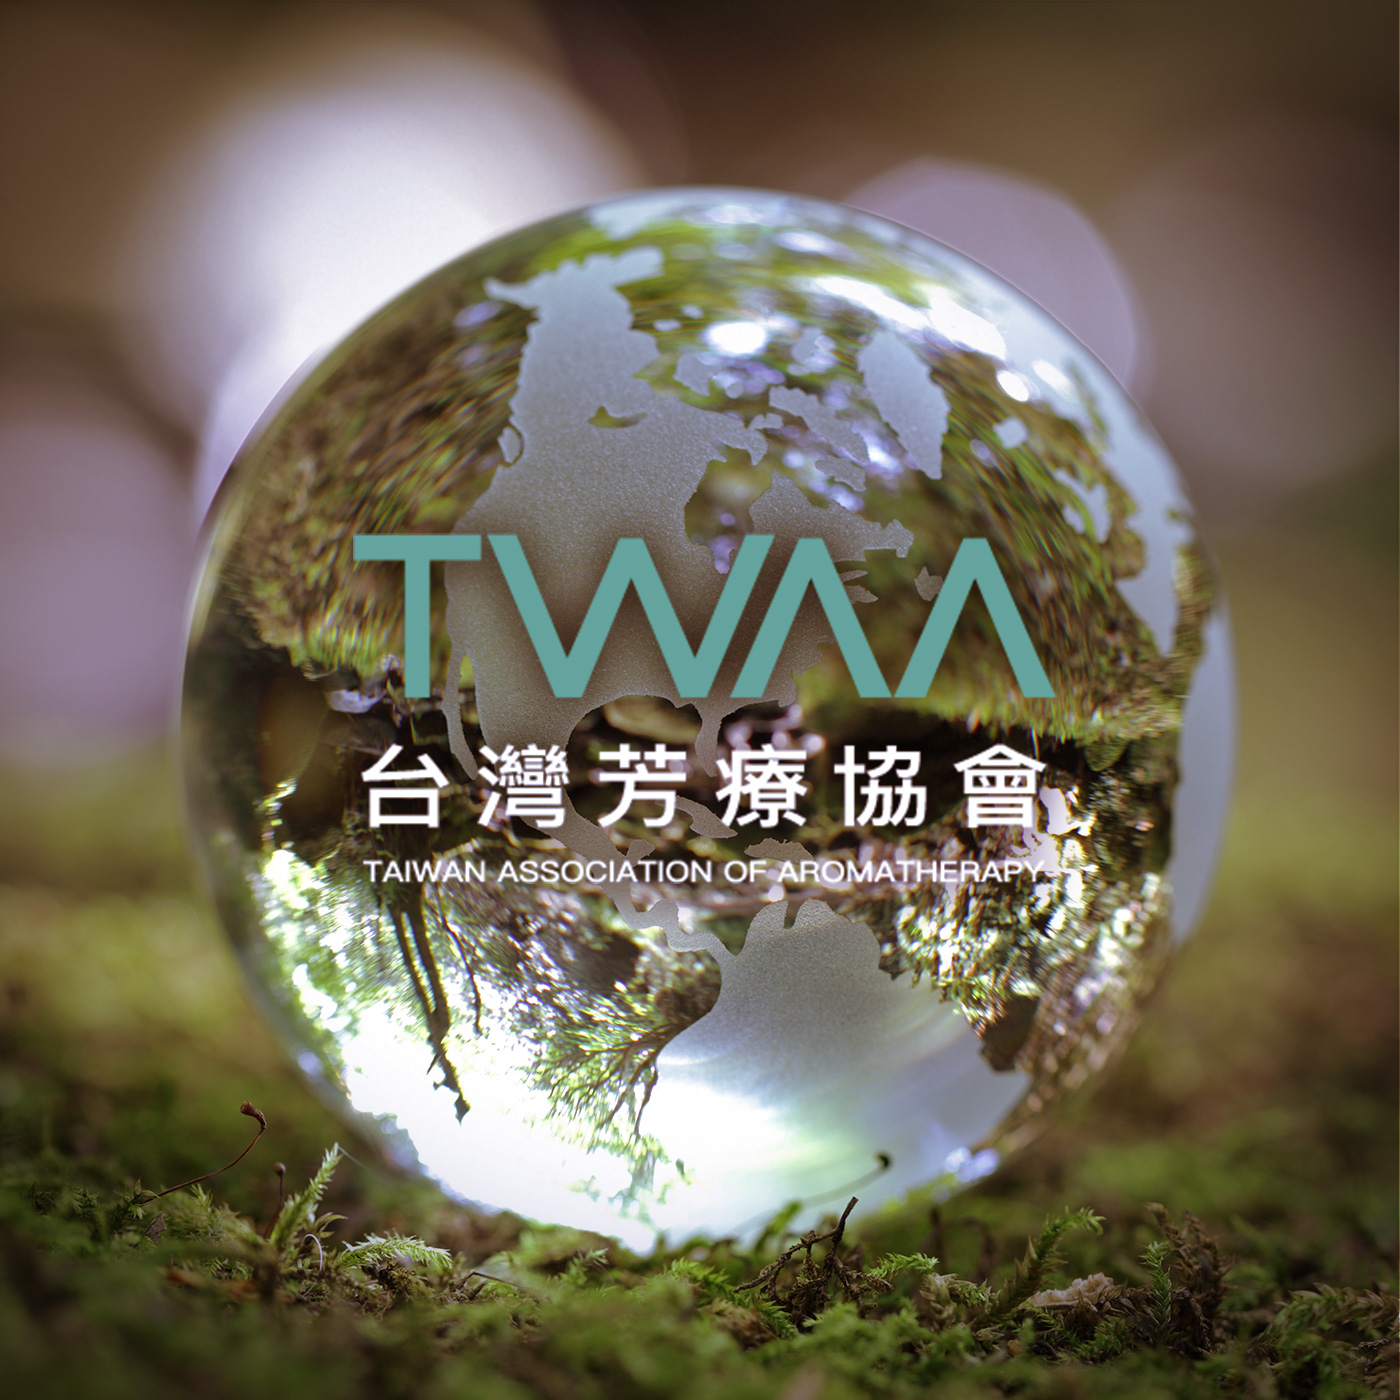 TWAA Radio 台灣芳療協會網路電台